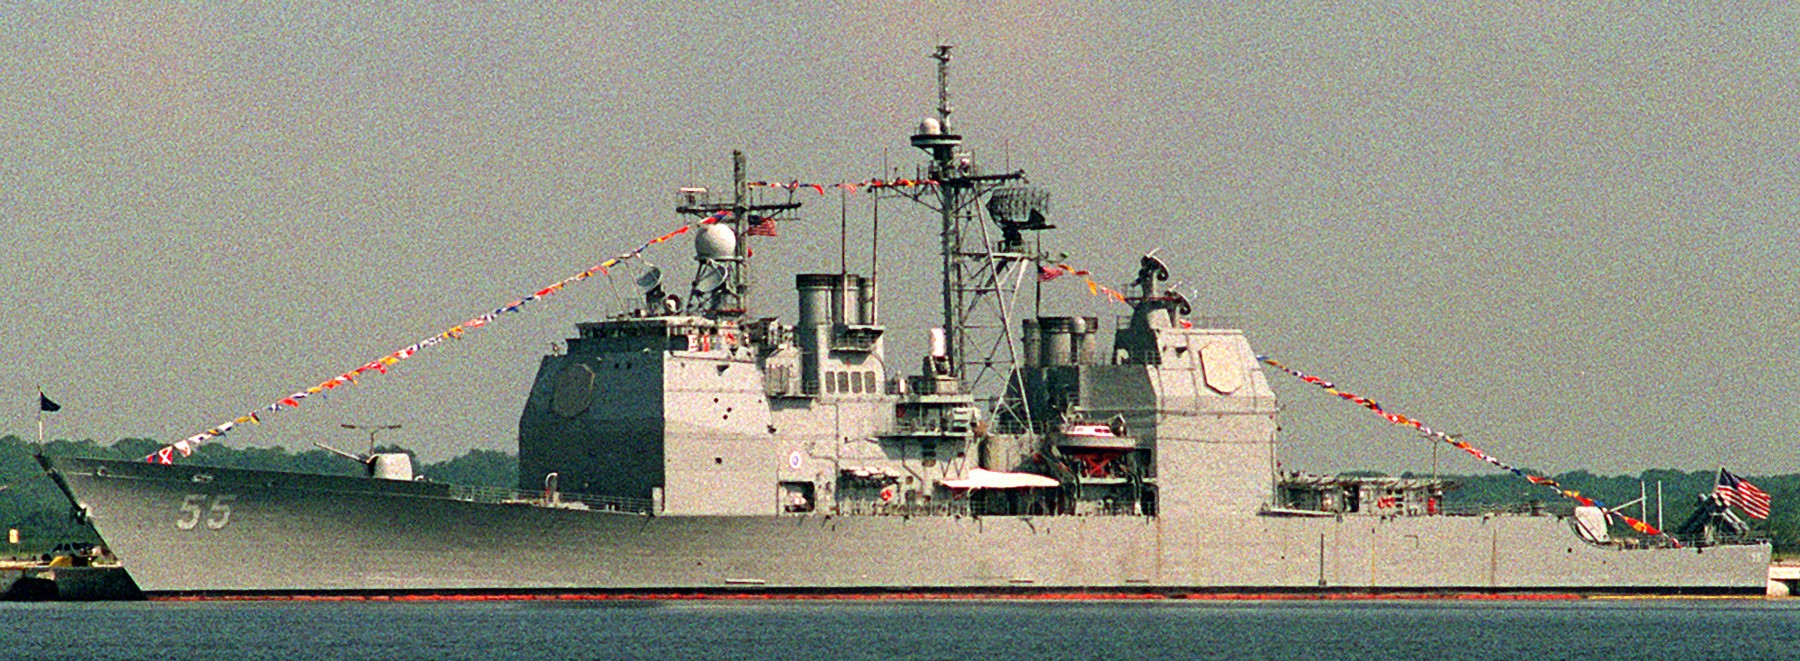 cg-55 uss leyte gulf ticonderoga class guided missile cruiser aegis us navy mayport florida 17